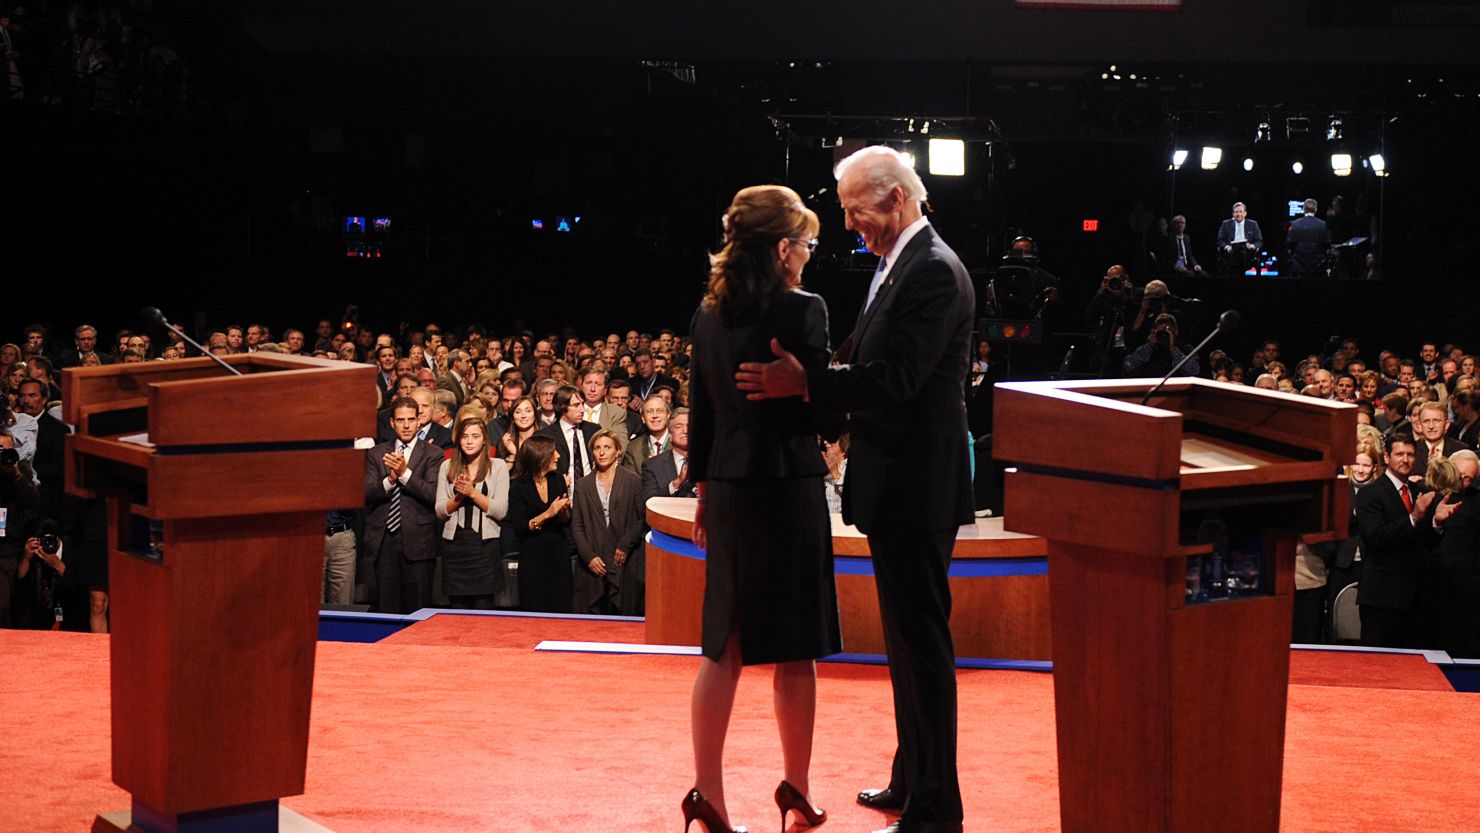 Joe Biden greets Sarah Palin during the 2008 vice presidential debate in St. Louis.